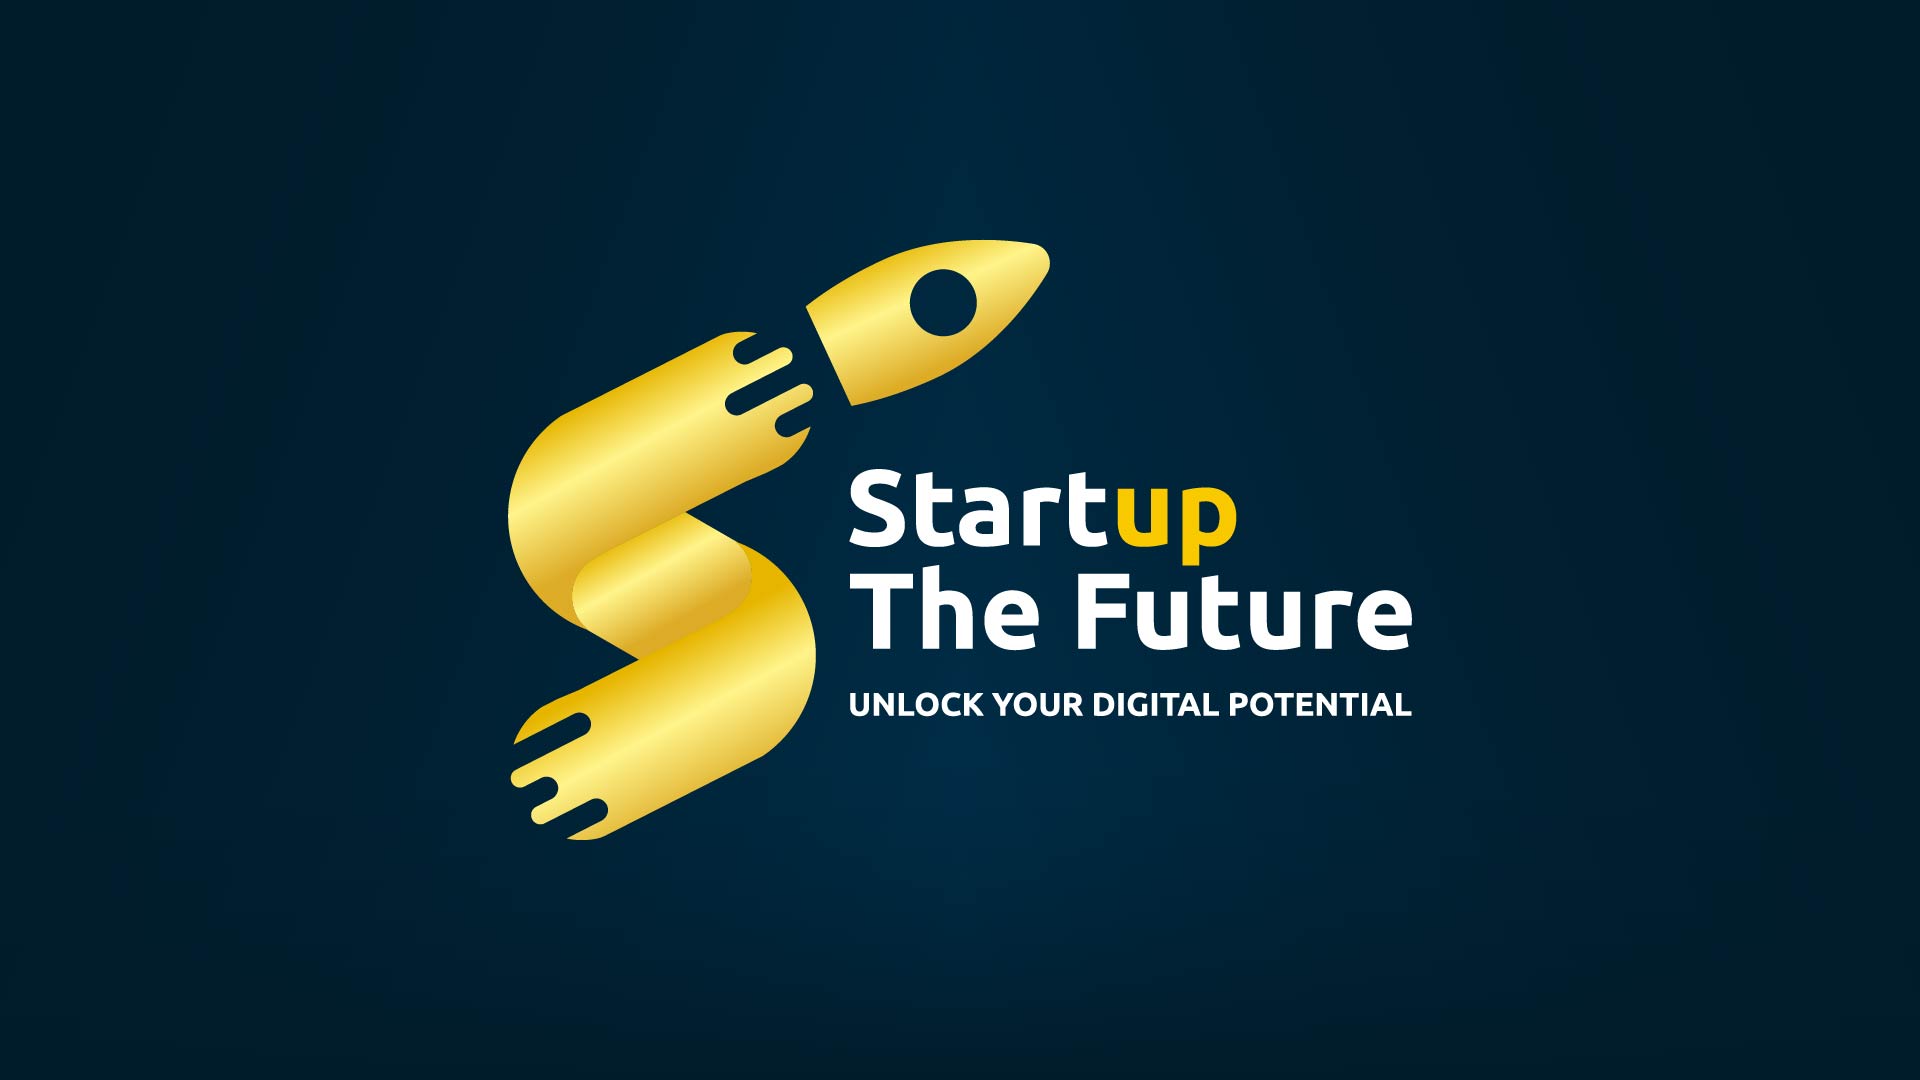 (c) Startup-the-future.de